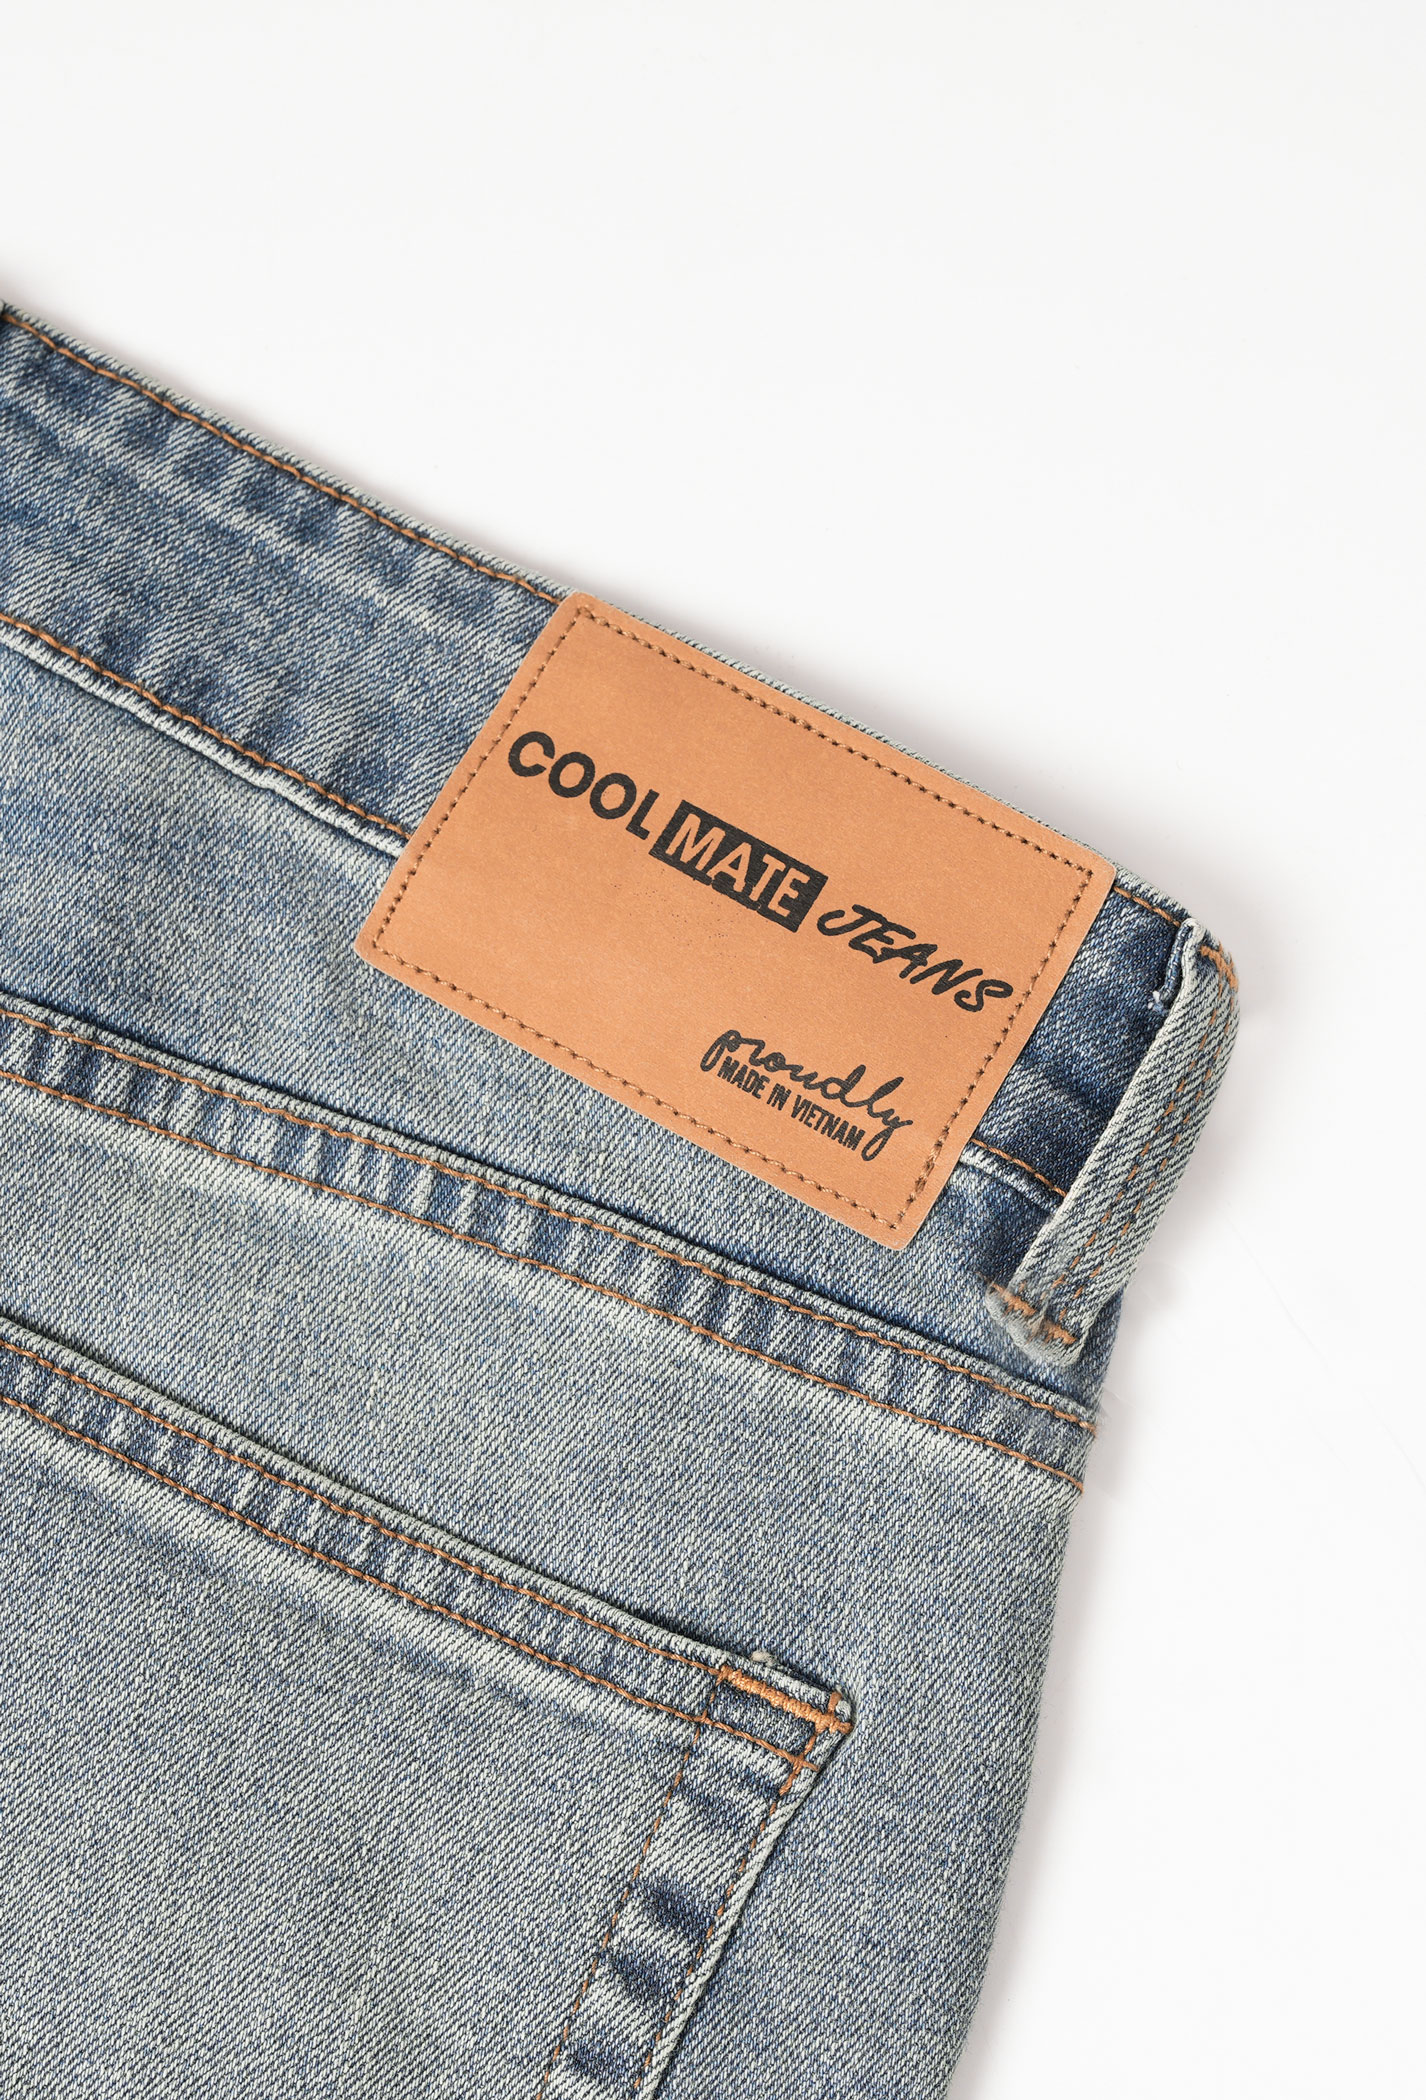 OUTLET - Quần Jeans Basic Slim V2 Xanh nhạt 4